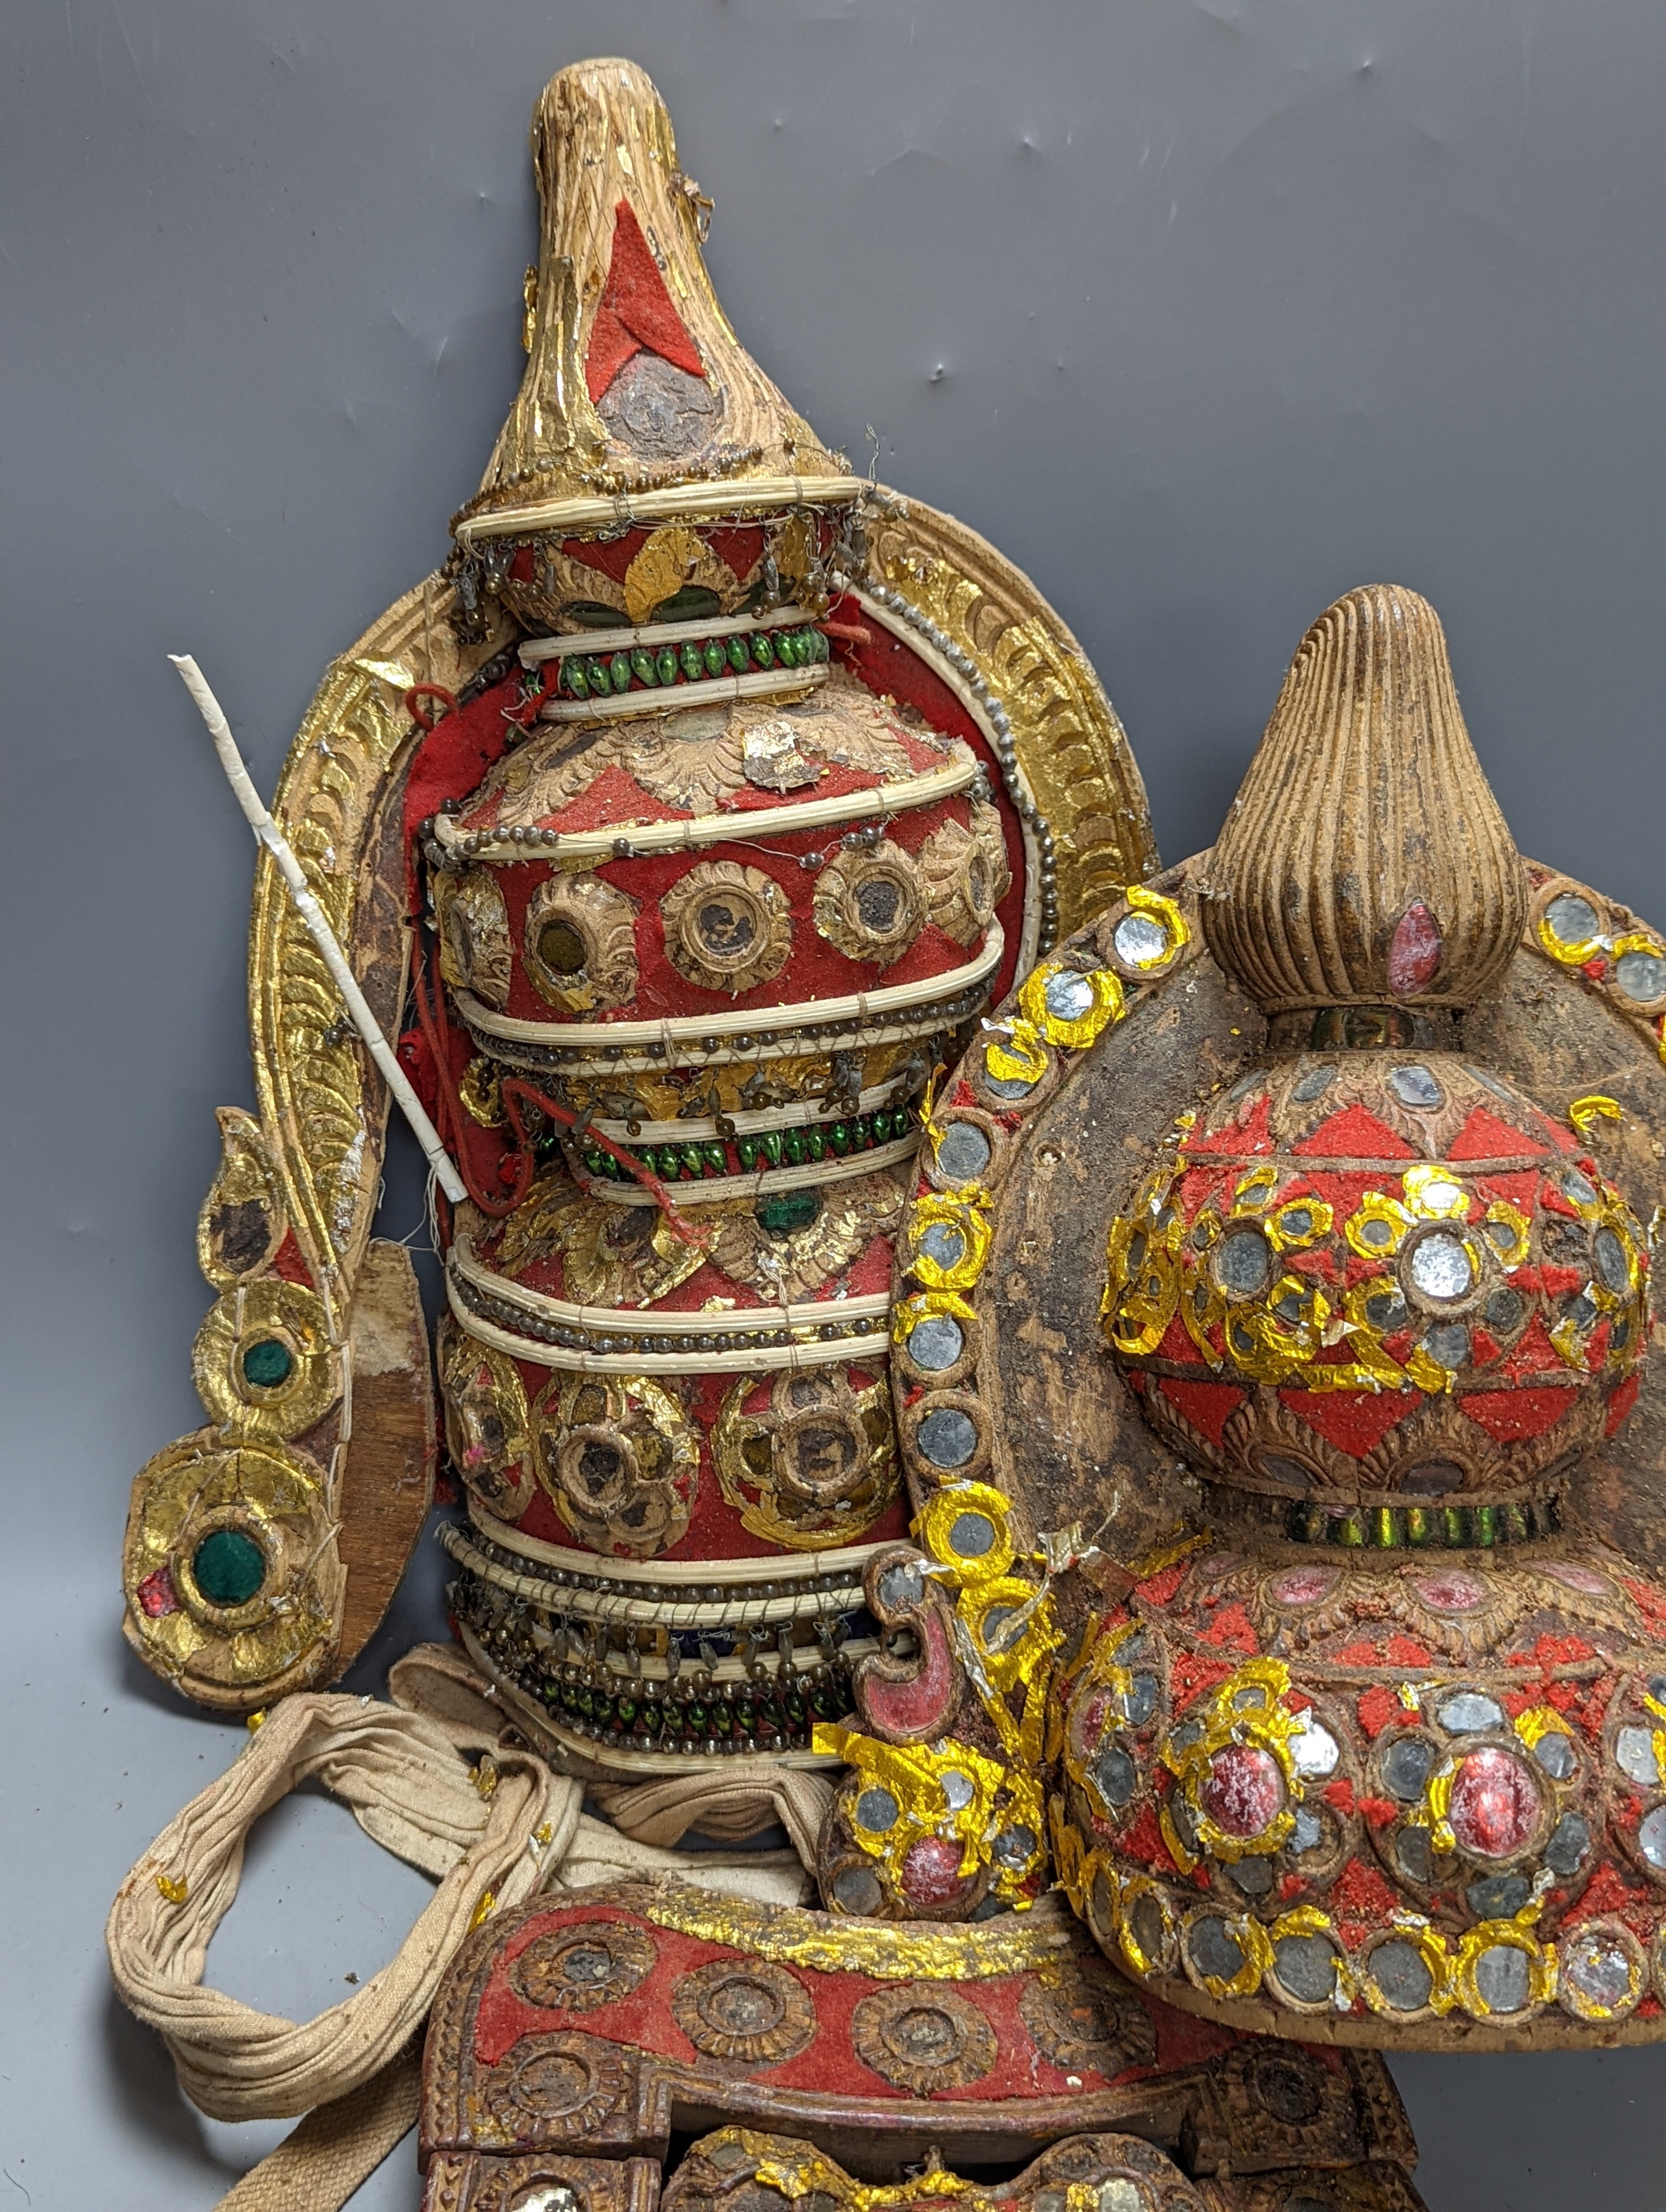 A group of Indian ornate wooden headdresses, masks etc